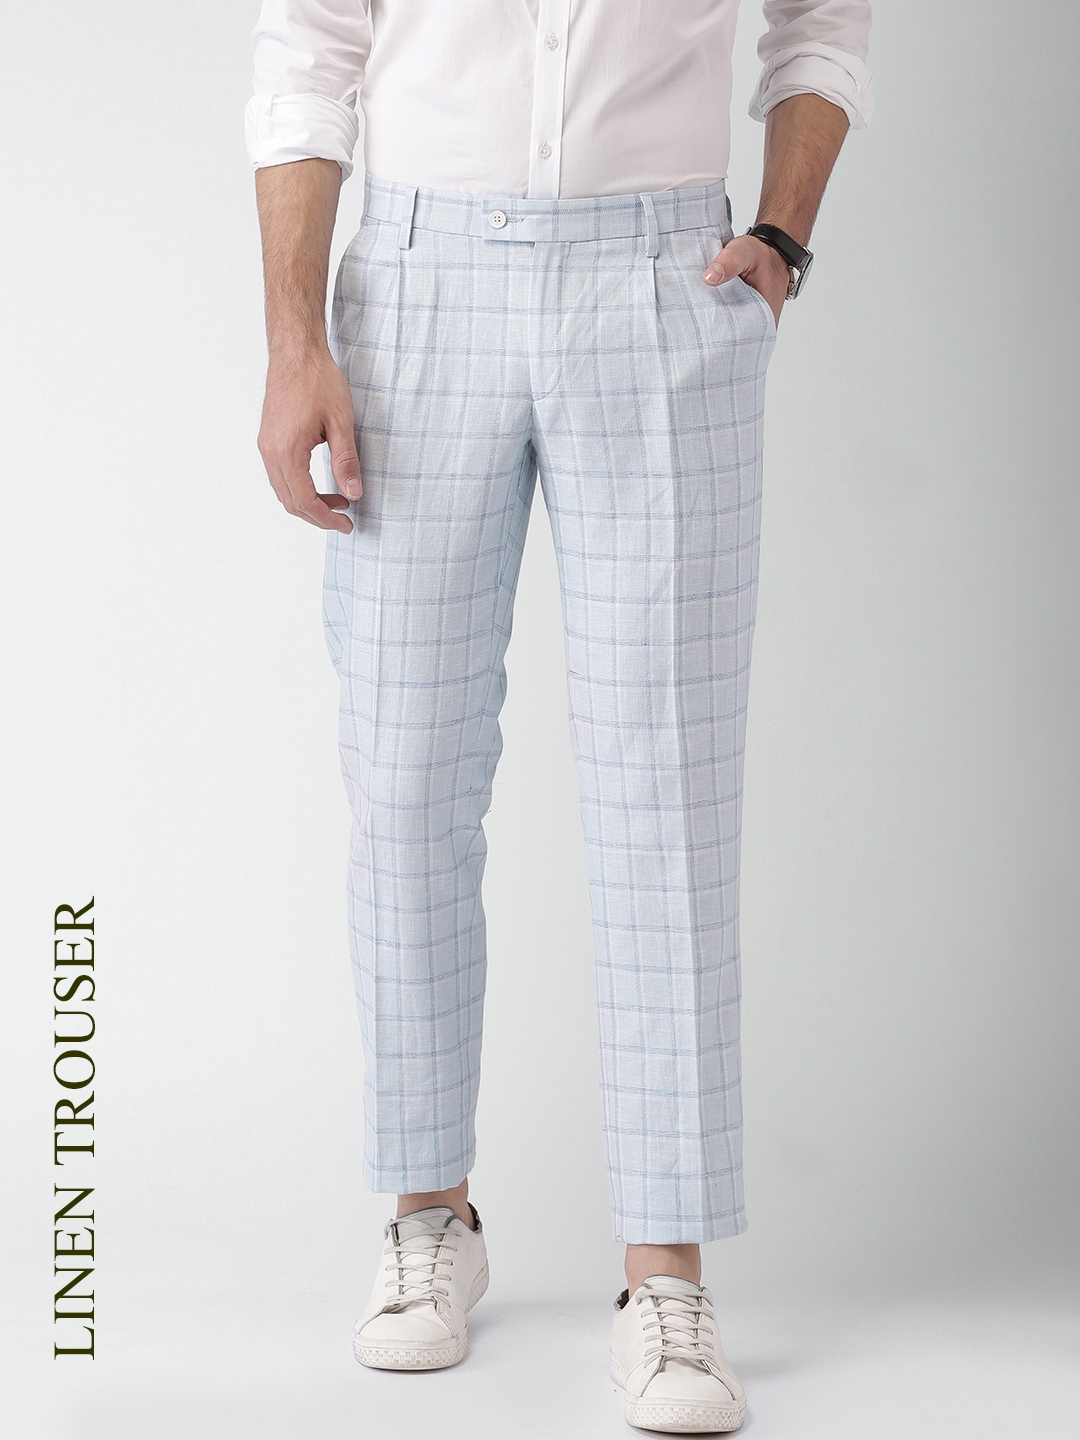 Elegant men's checked trousers blue DJP81 | Fashionformen.eu